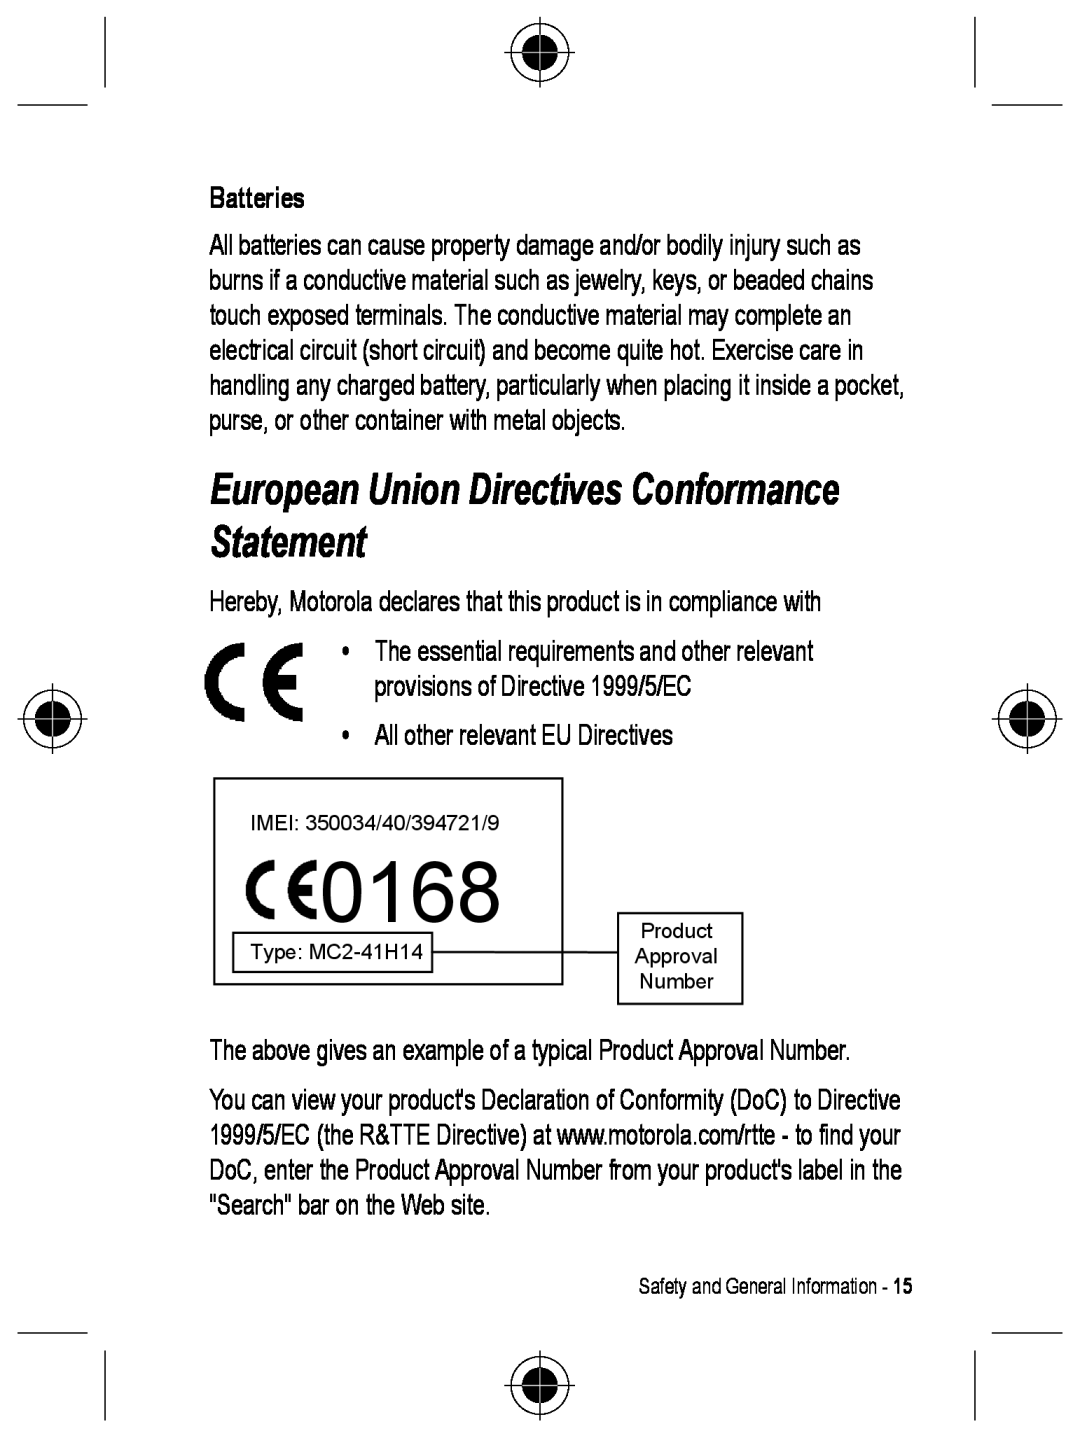 Motorola C330 manual European Union Directives Conformance Statement, 0168, Batteries 